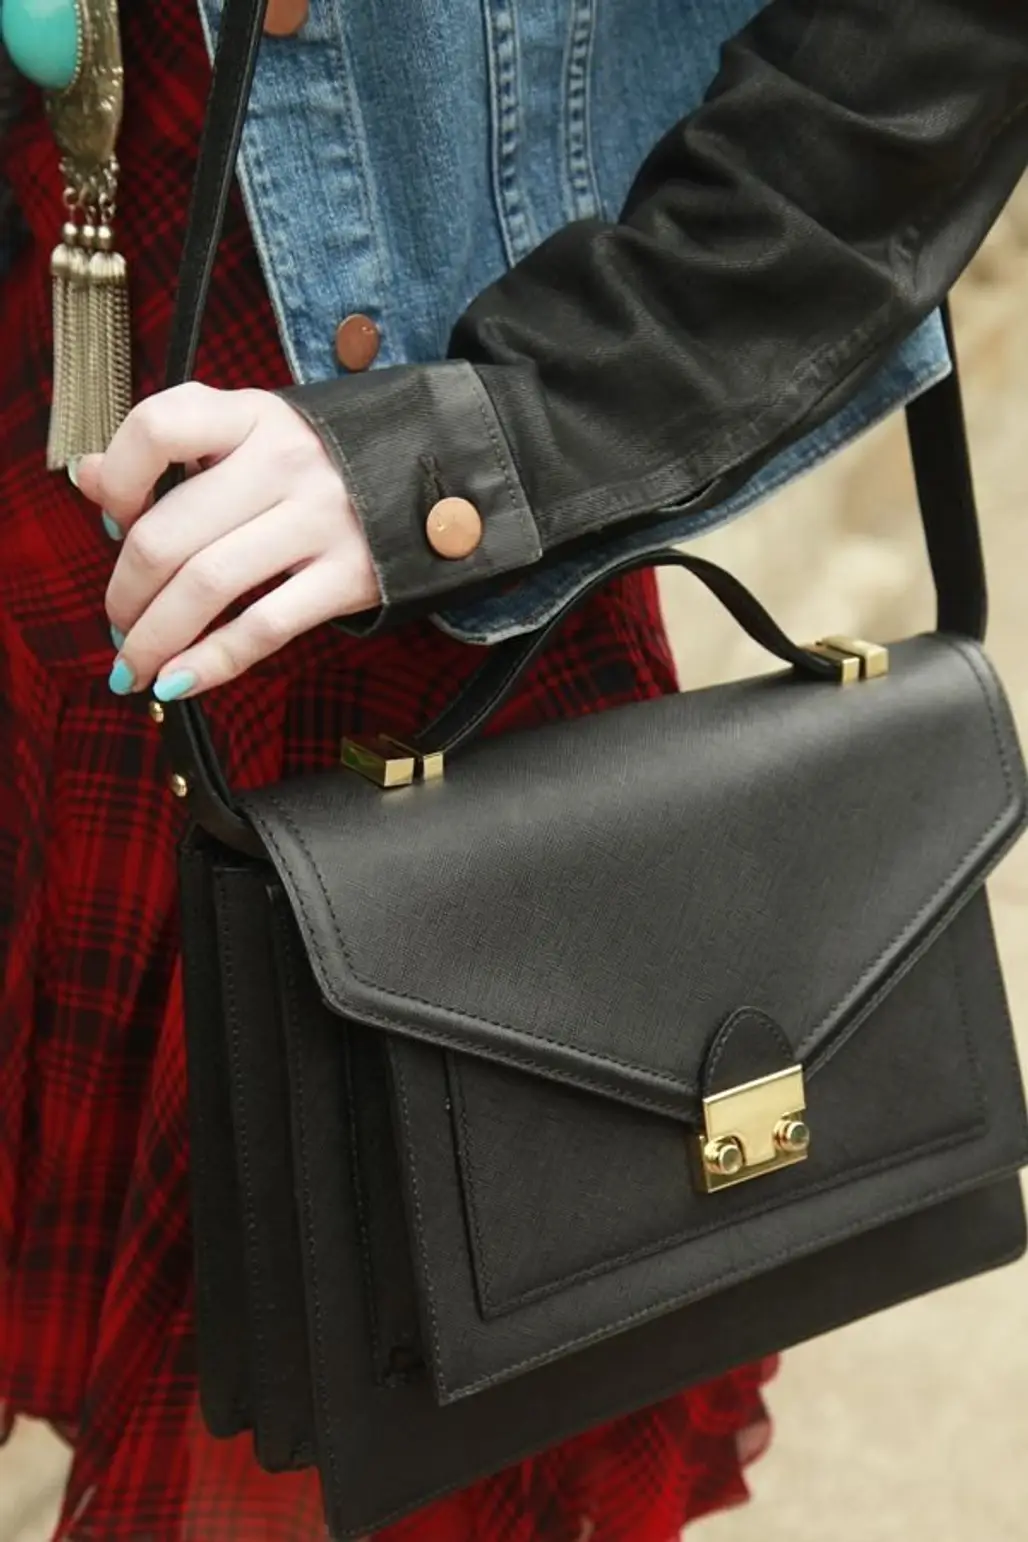 bag,handbag,red,leather,fashion accessory,